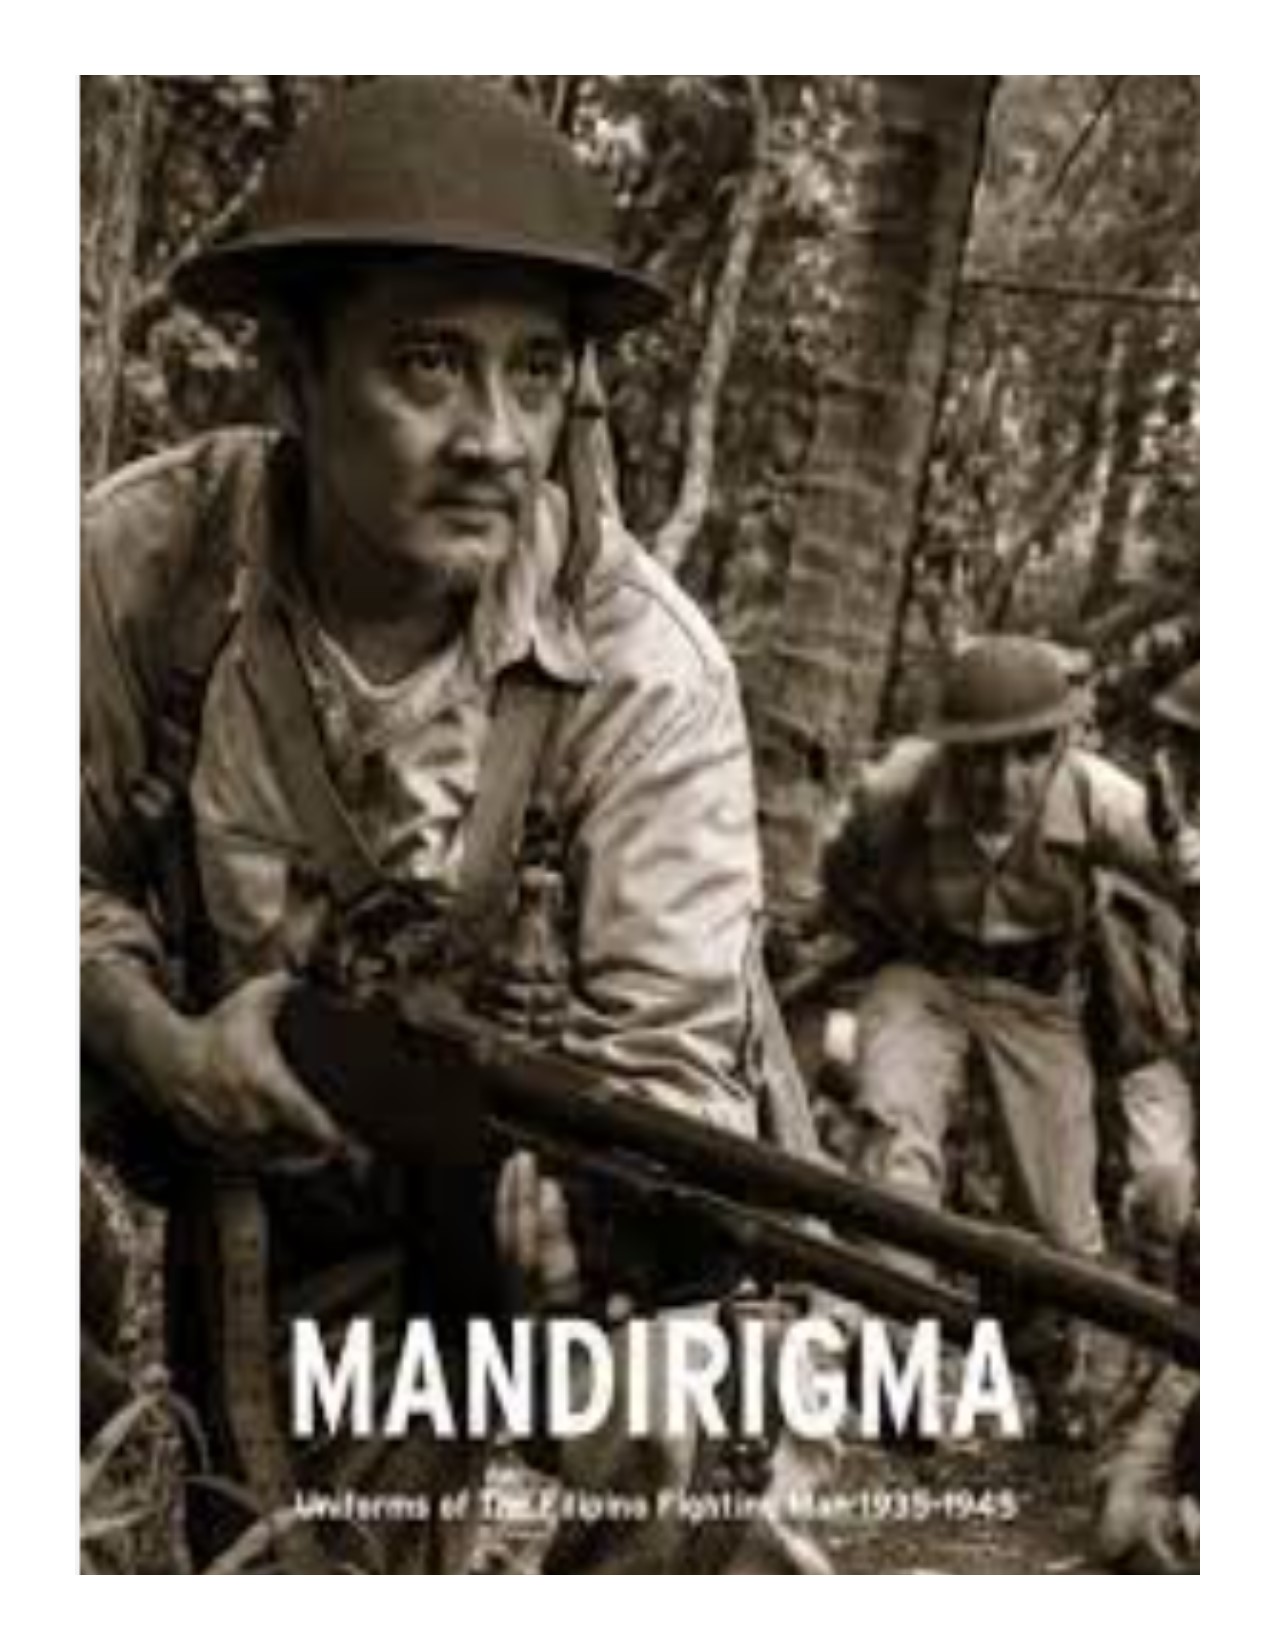 Mandirigma uniforms of the Filipino fighting man 1935-1945